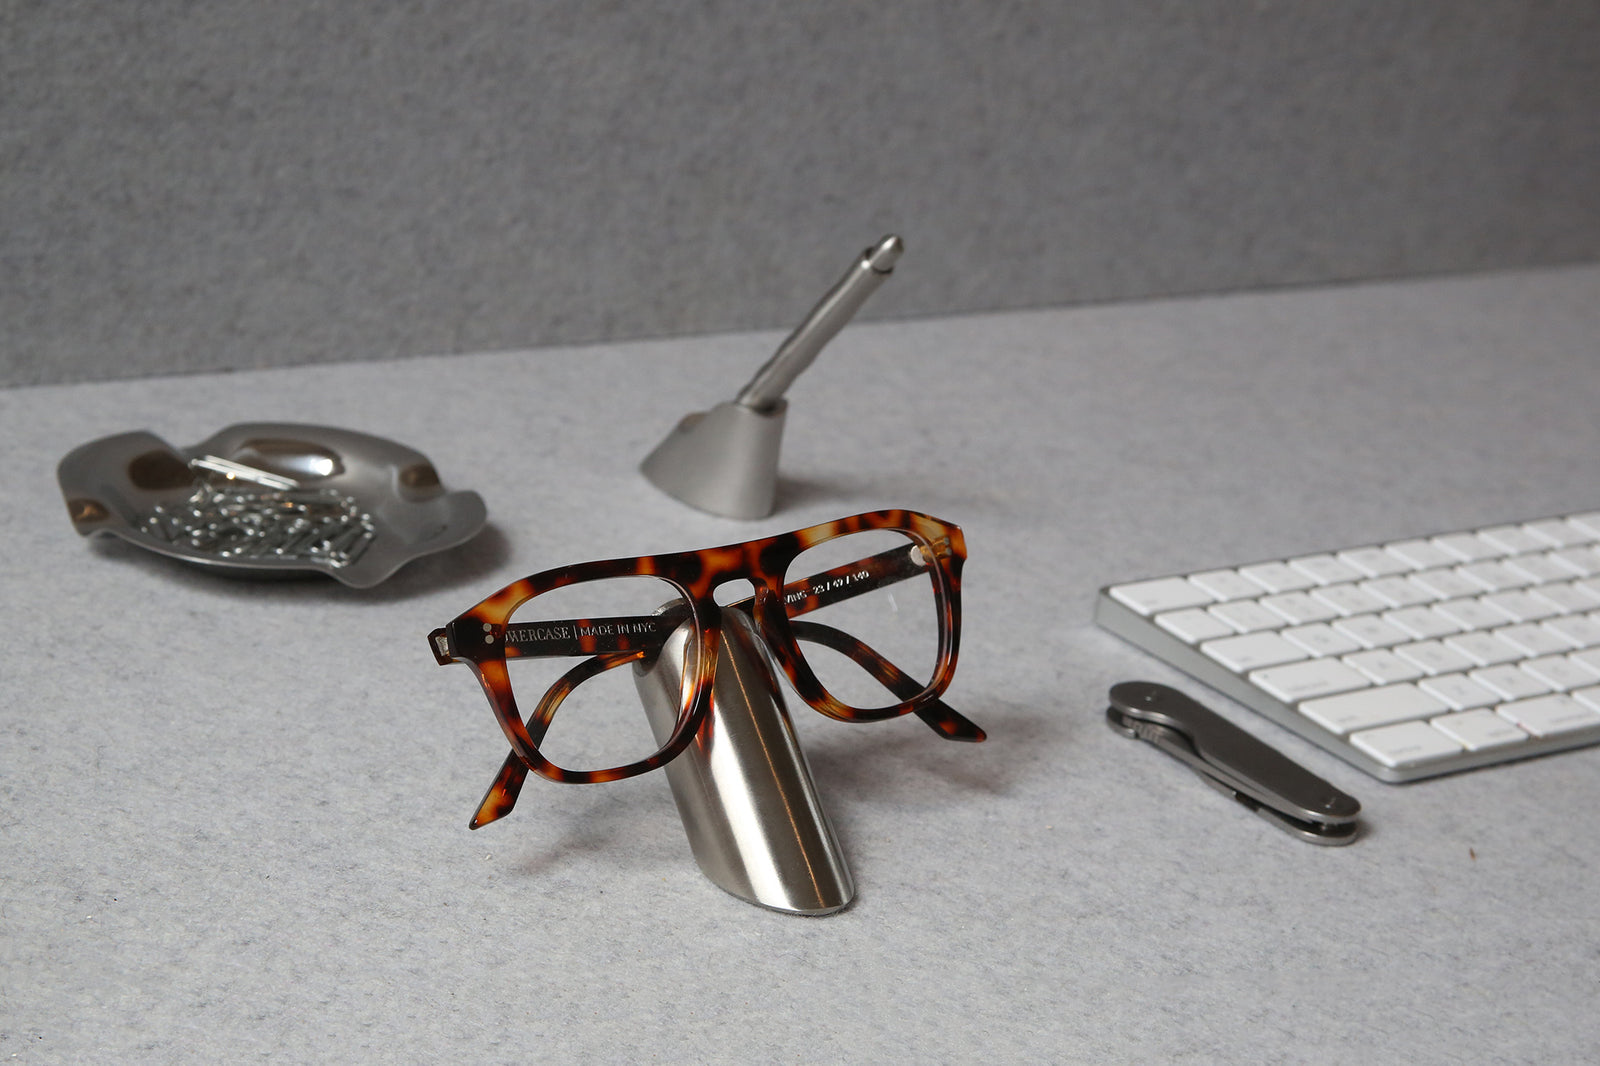 craighill eyewear stand on desk next to apple magic keyboard